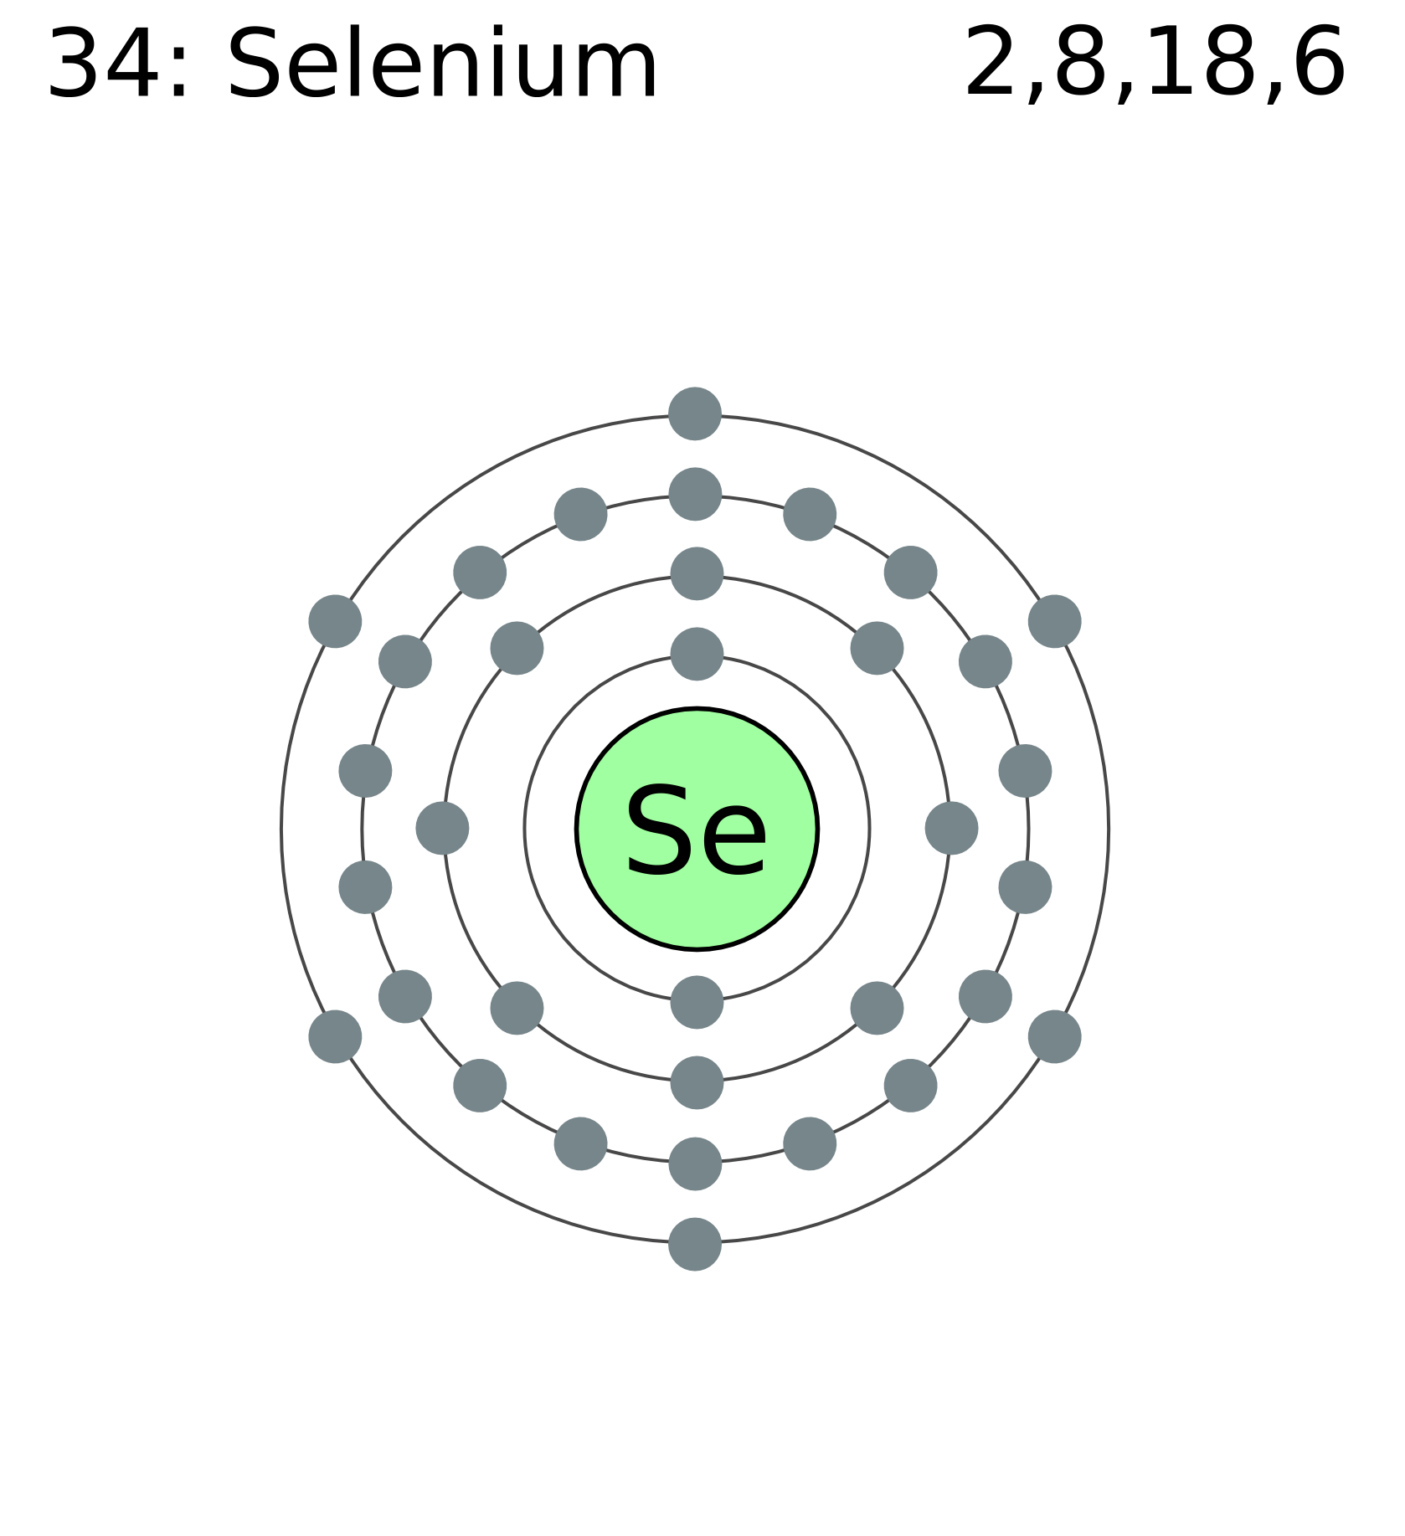 Формула атома брома. Селен схема строения атома. Строение атома se селен. Строение элемента селен.